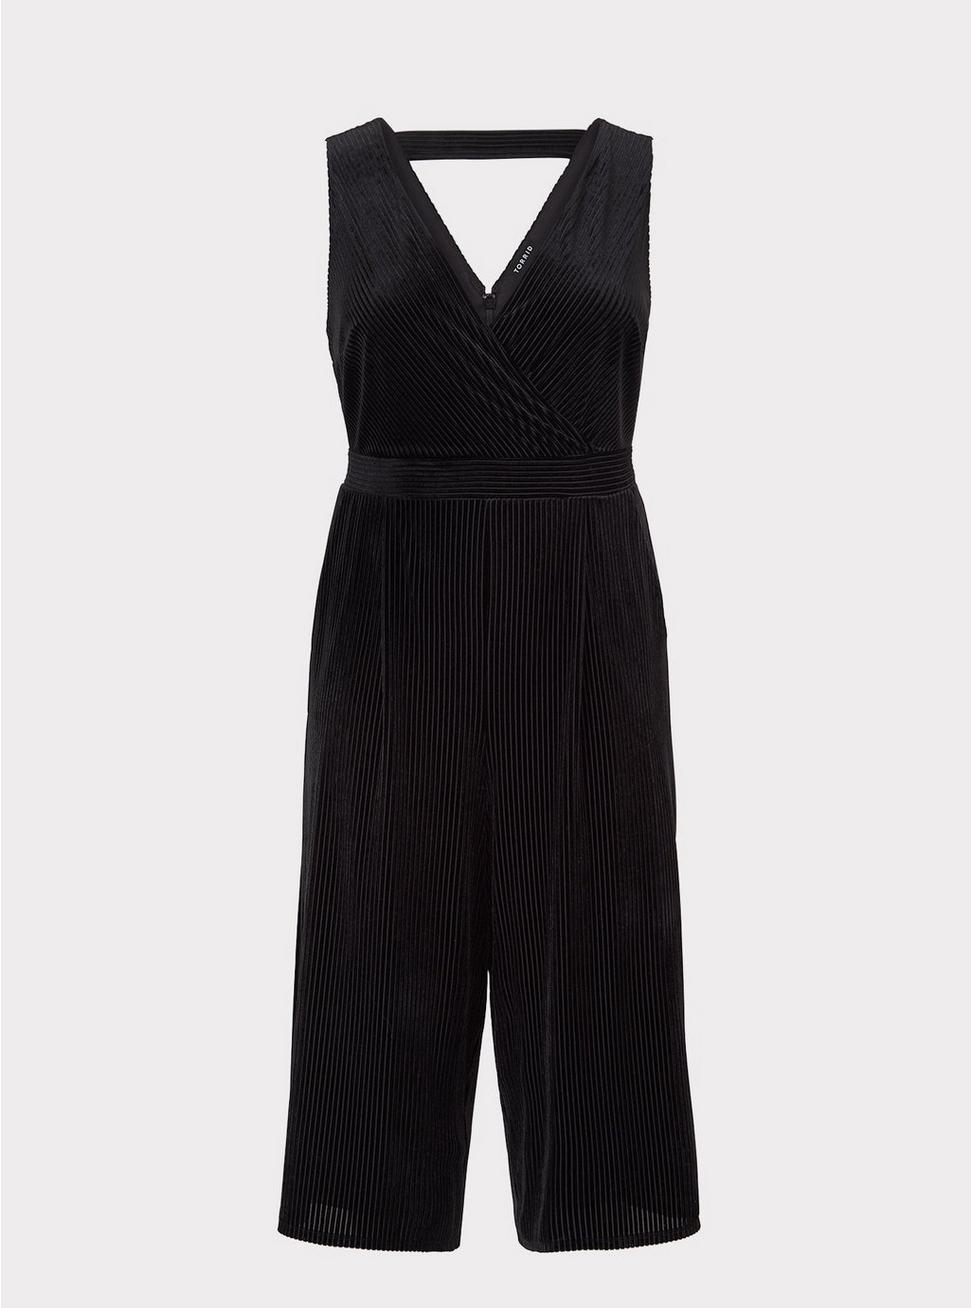 Plus Size - Black Shadow Stripe Velvet Jumpsuit - Torrid